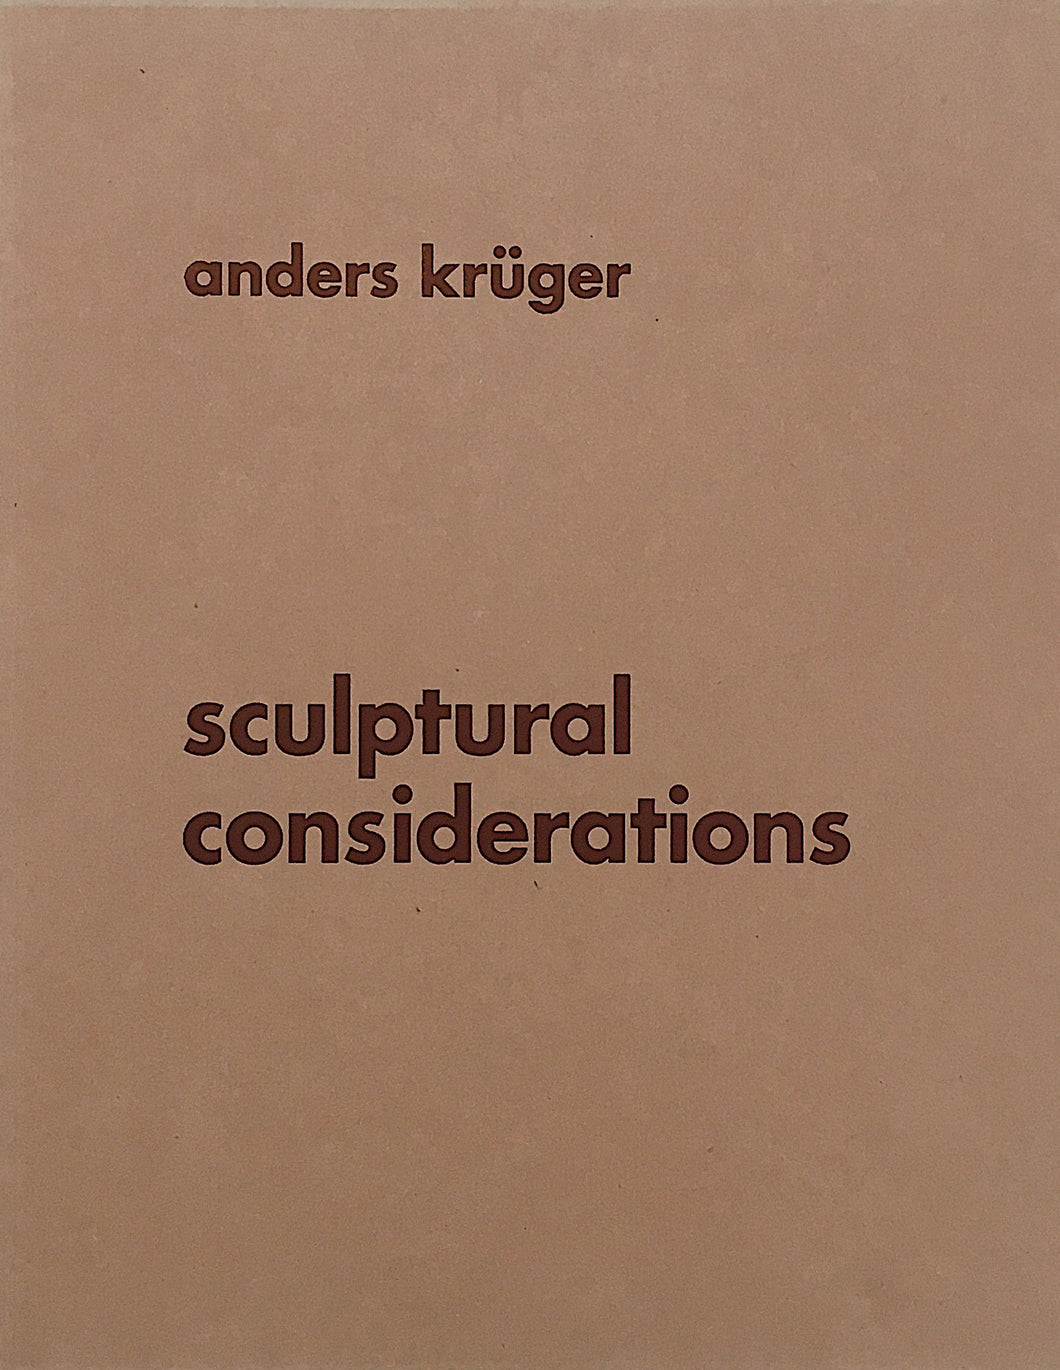 SCULPTURAL CONSIDERATIONS- ANDERS KRÜGER